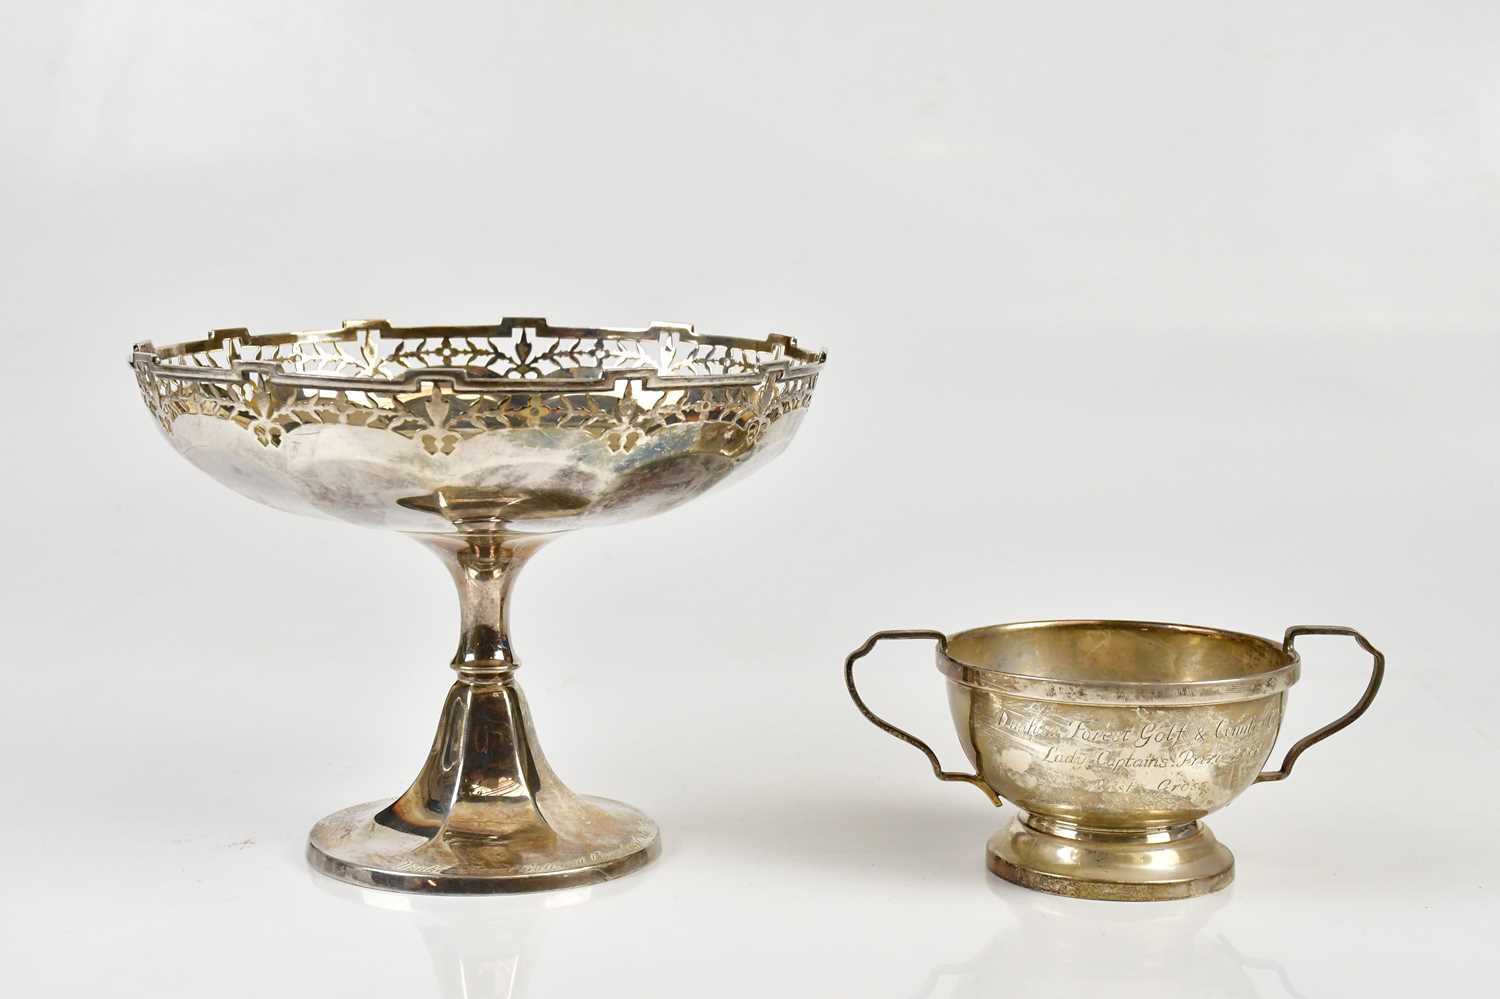 ADIE BROTHERS LTD; a George V hallmarked silver pedestal bowl with pierced rim, Birmingham 1925, and